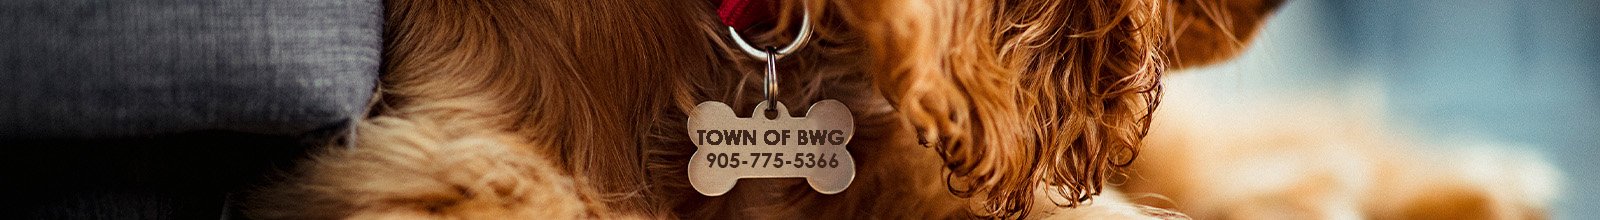 Up close photo of dog wearing a BWG Dog Tag